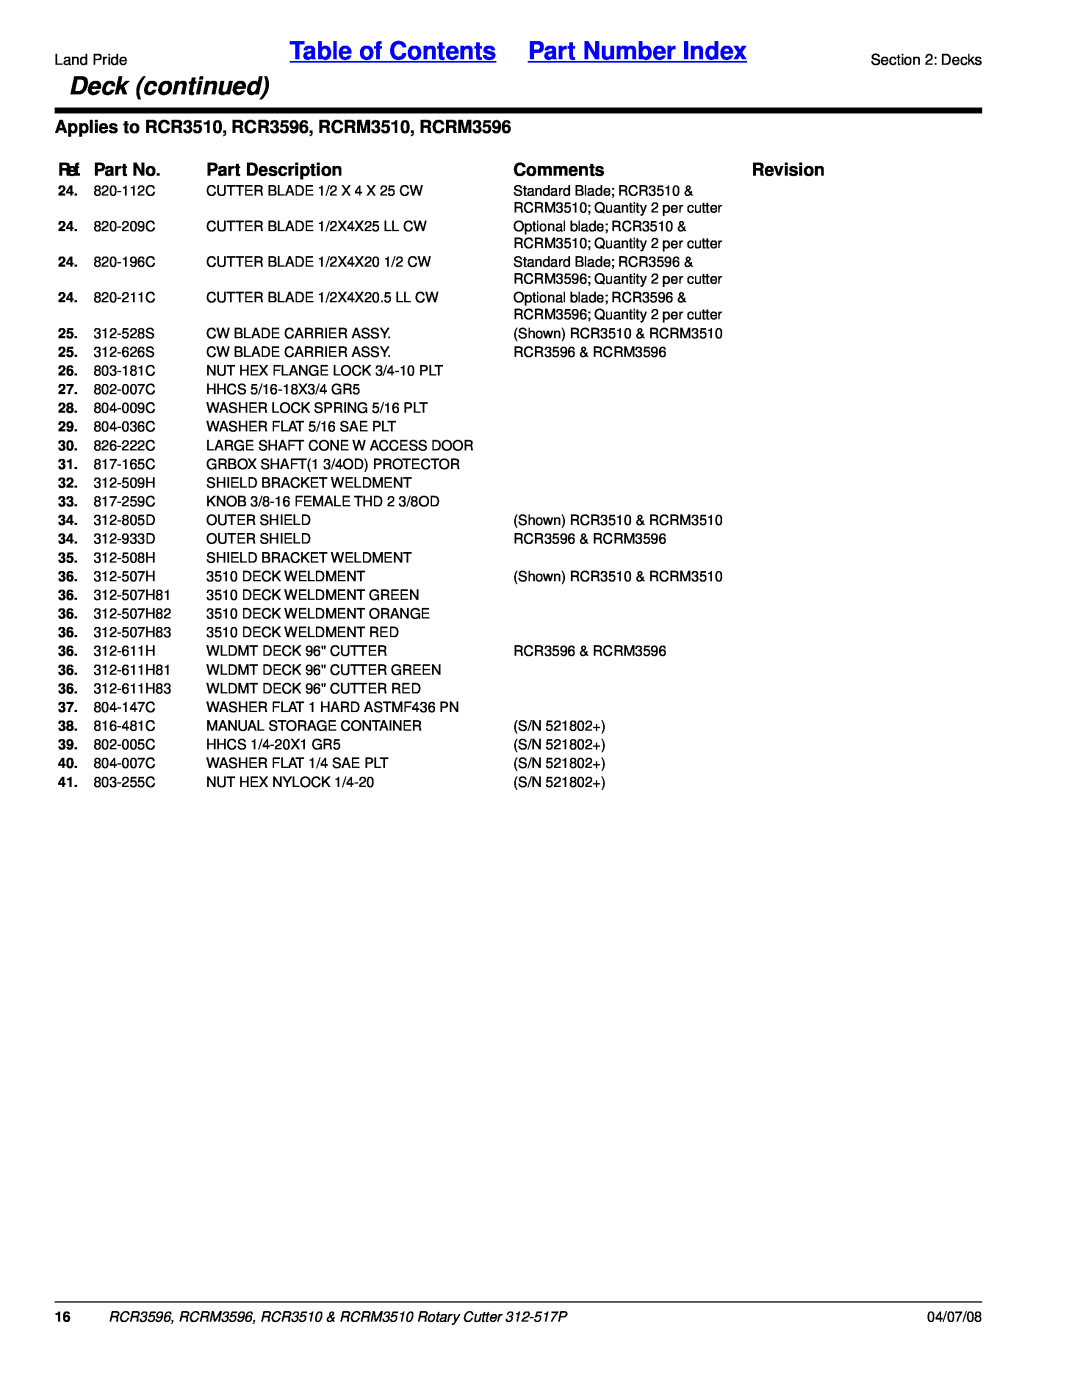 Land Pride manual Deck continued, Table of Contents Part Number Index, Applies to RCR3510, RCR3596, RCRM3510, RCRM3596 